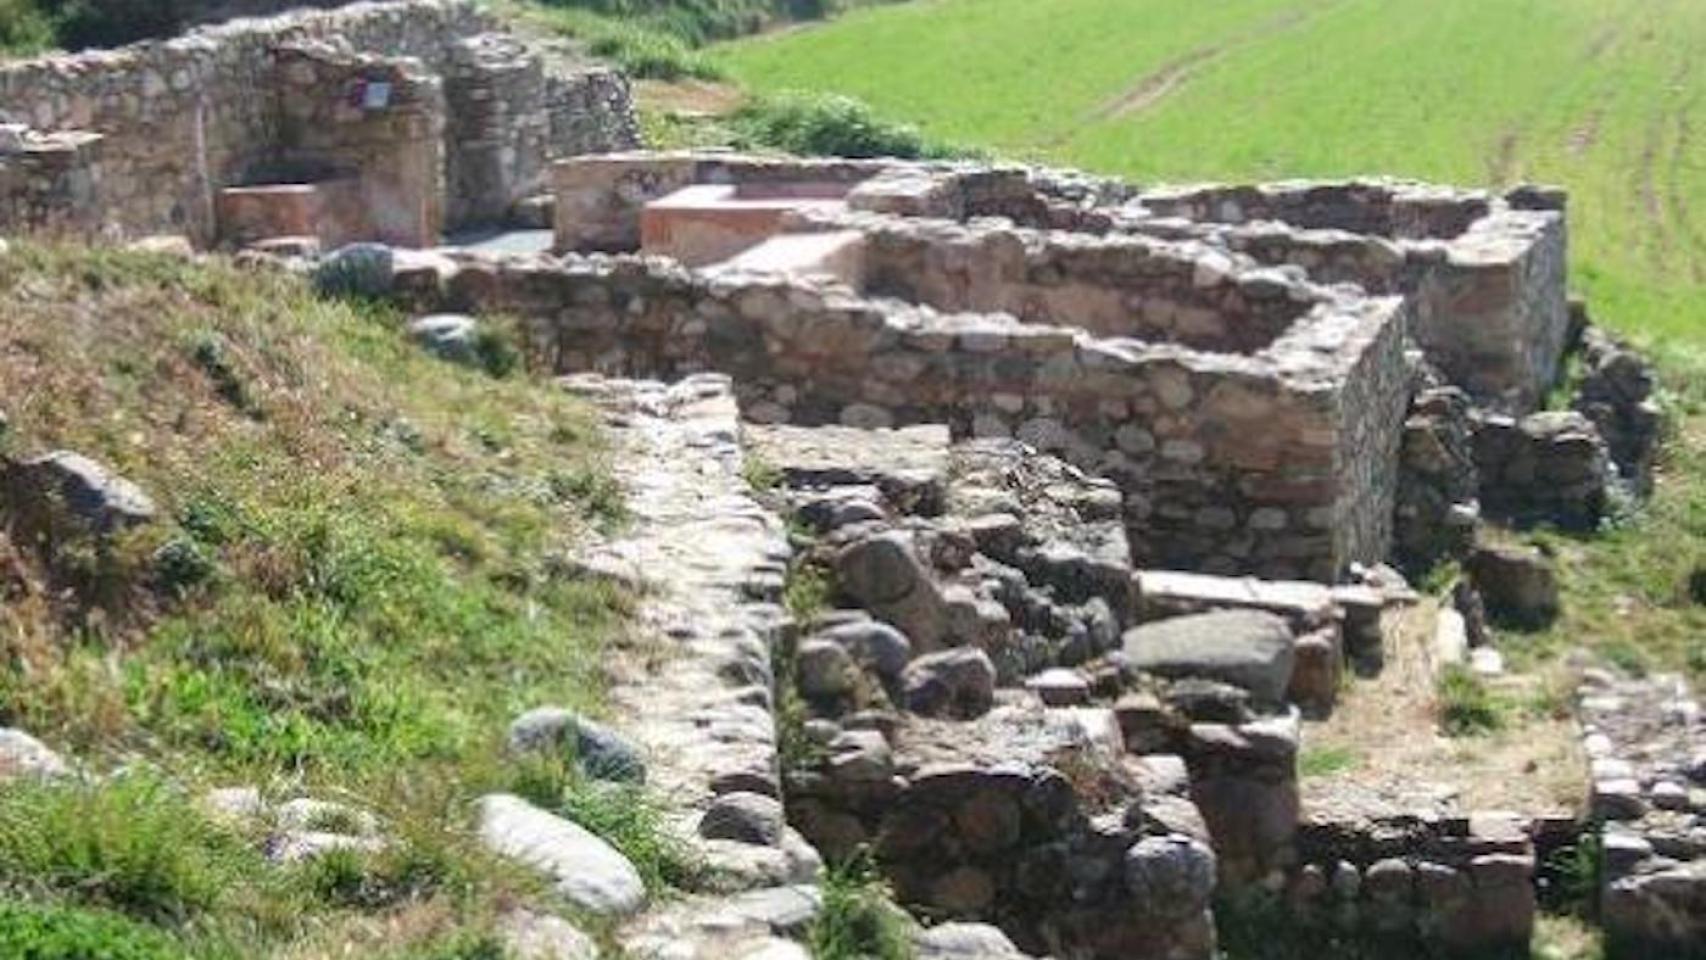 Villa romana de Can Terrés en una imagen de archivo